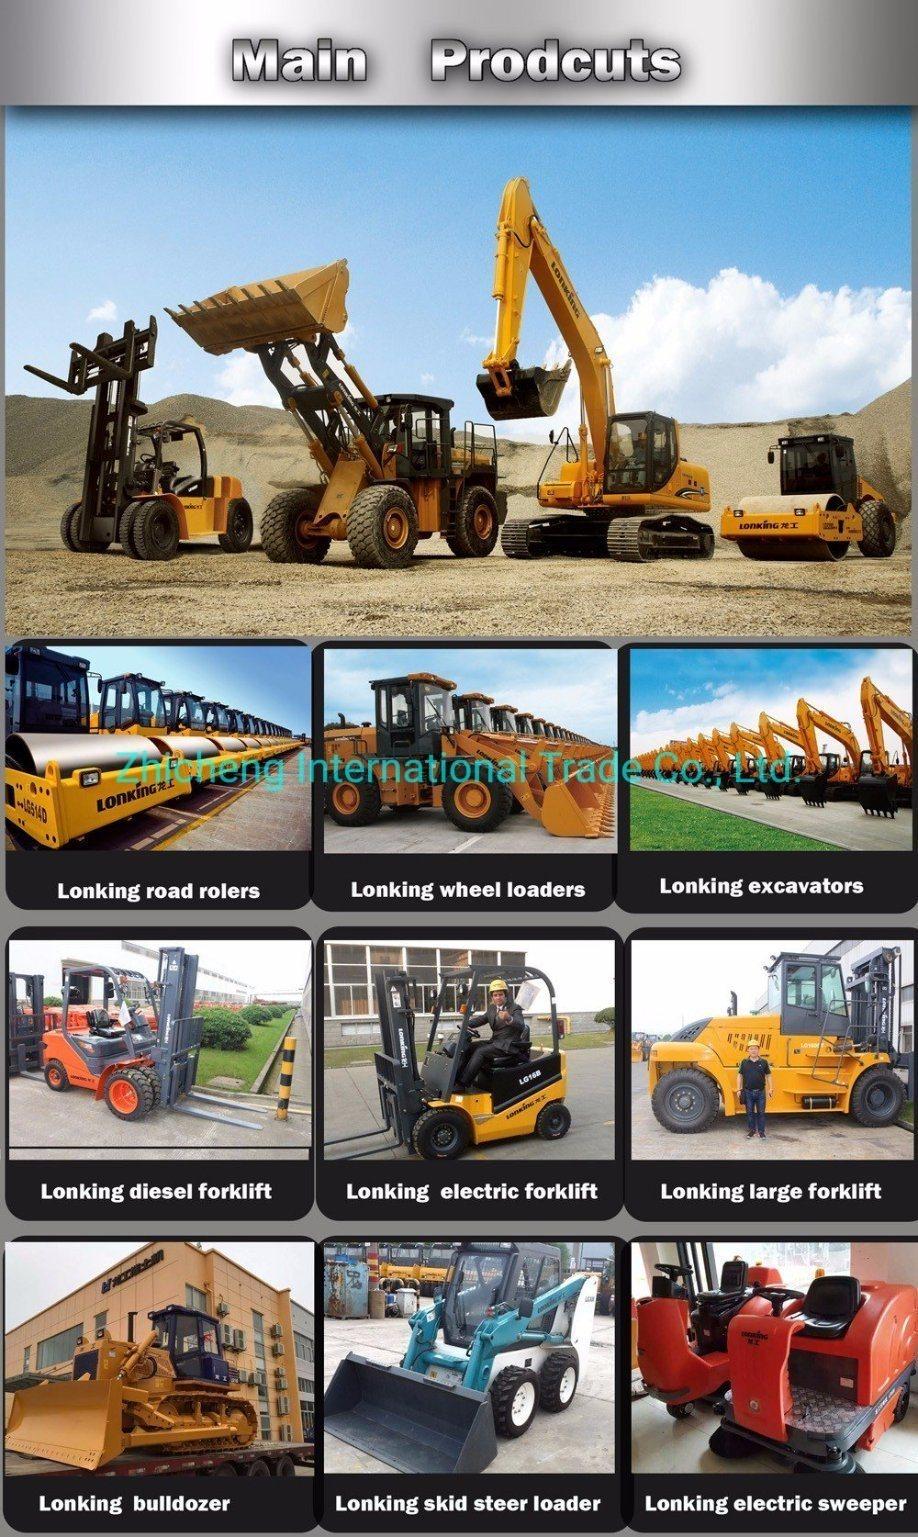 925D Used Second Hand Crawler Excavator Caterpillar Hitachi 25 Ton 915D 915e 922e 922D 925D 933e 936e 945e 950e Excavators for Sale Chinese Brand Excavator